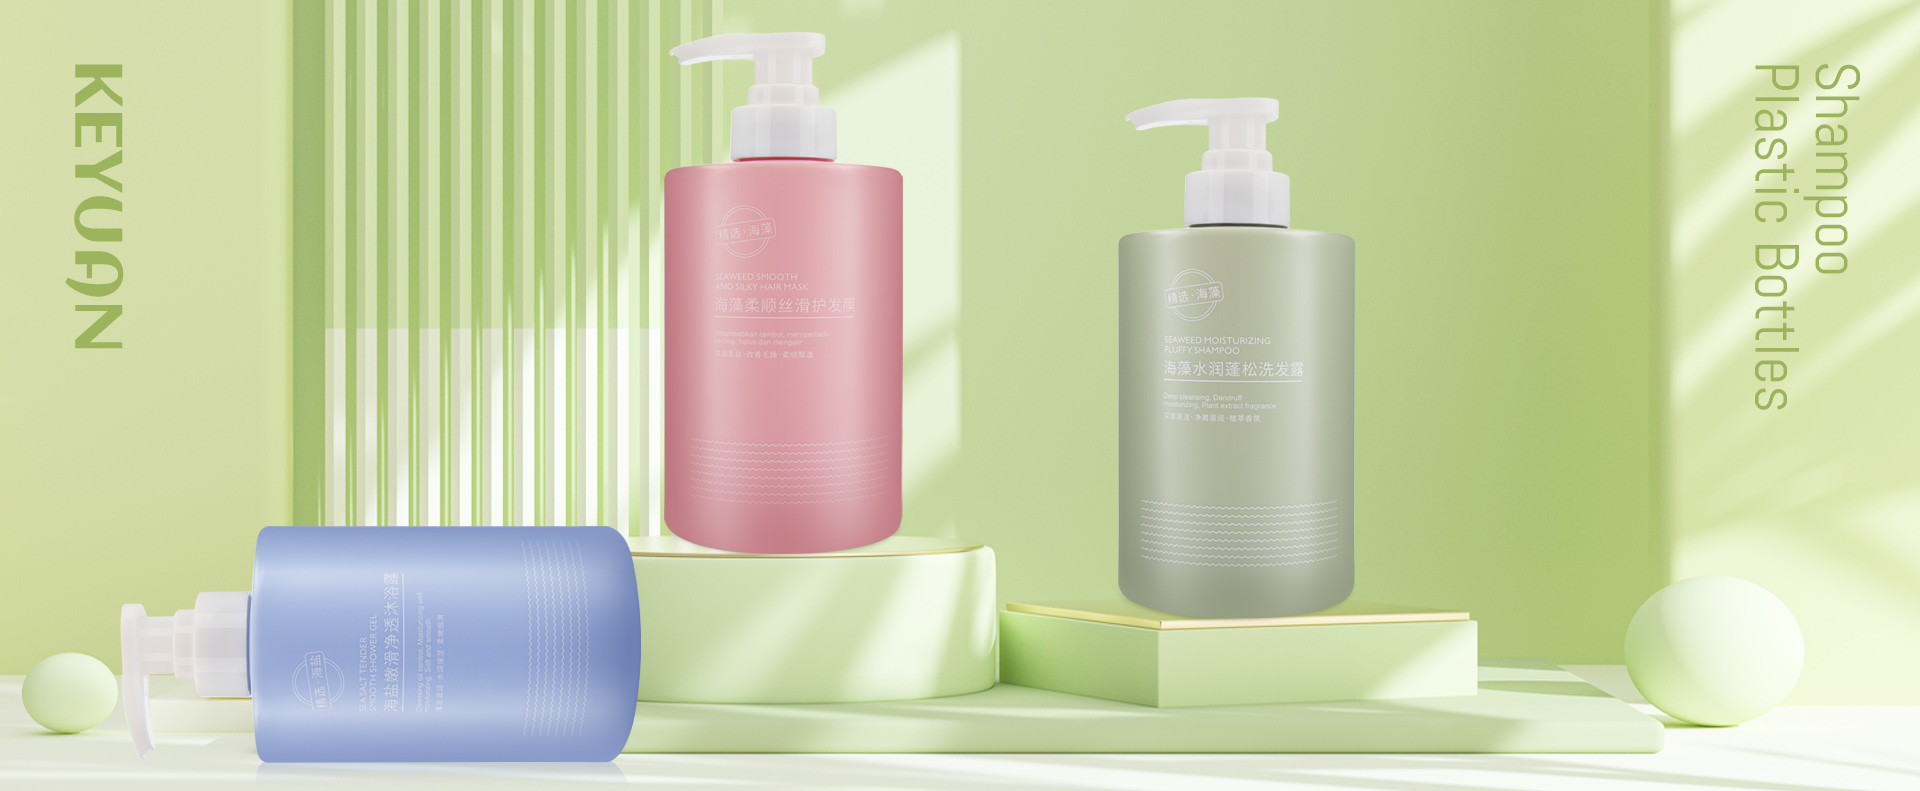 KY086 Seaweed Shampoo Hair Mask Seasalt Tender Shower Gel HDPE Plastic 500ml Large Size Capacity Family Use